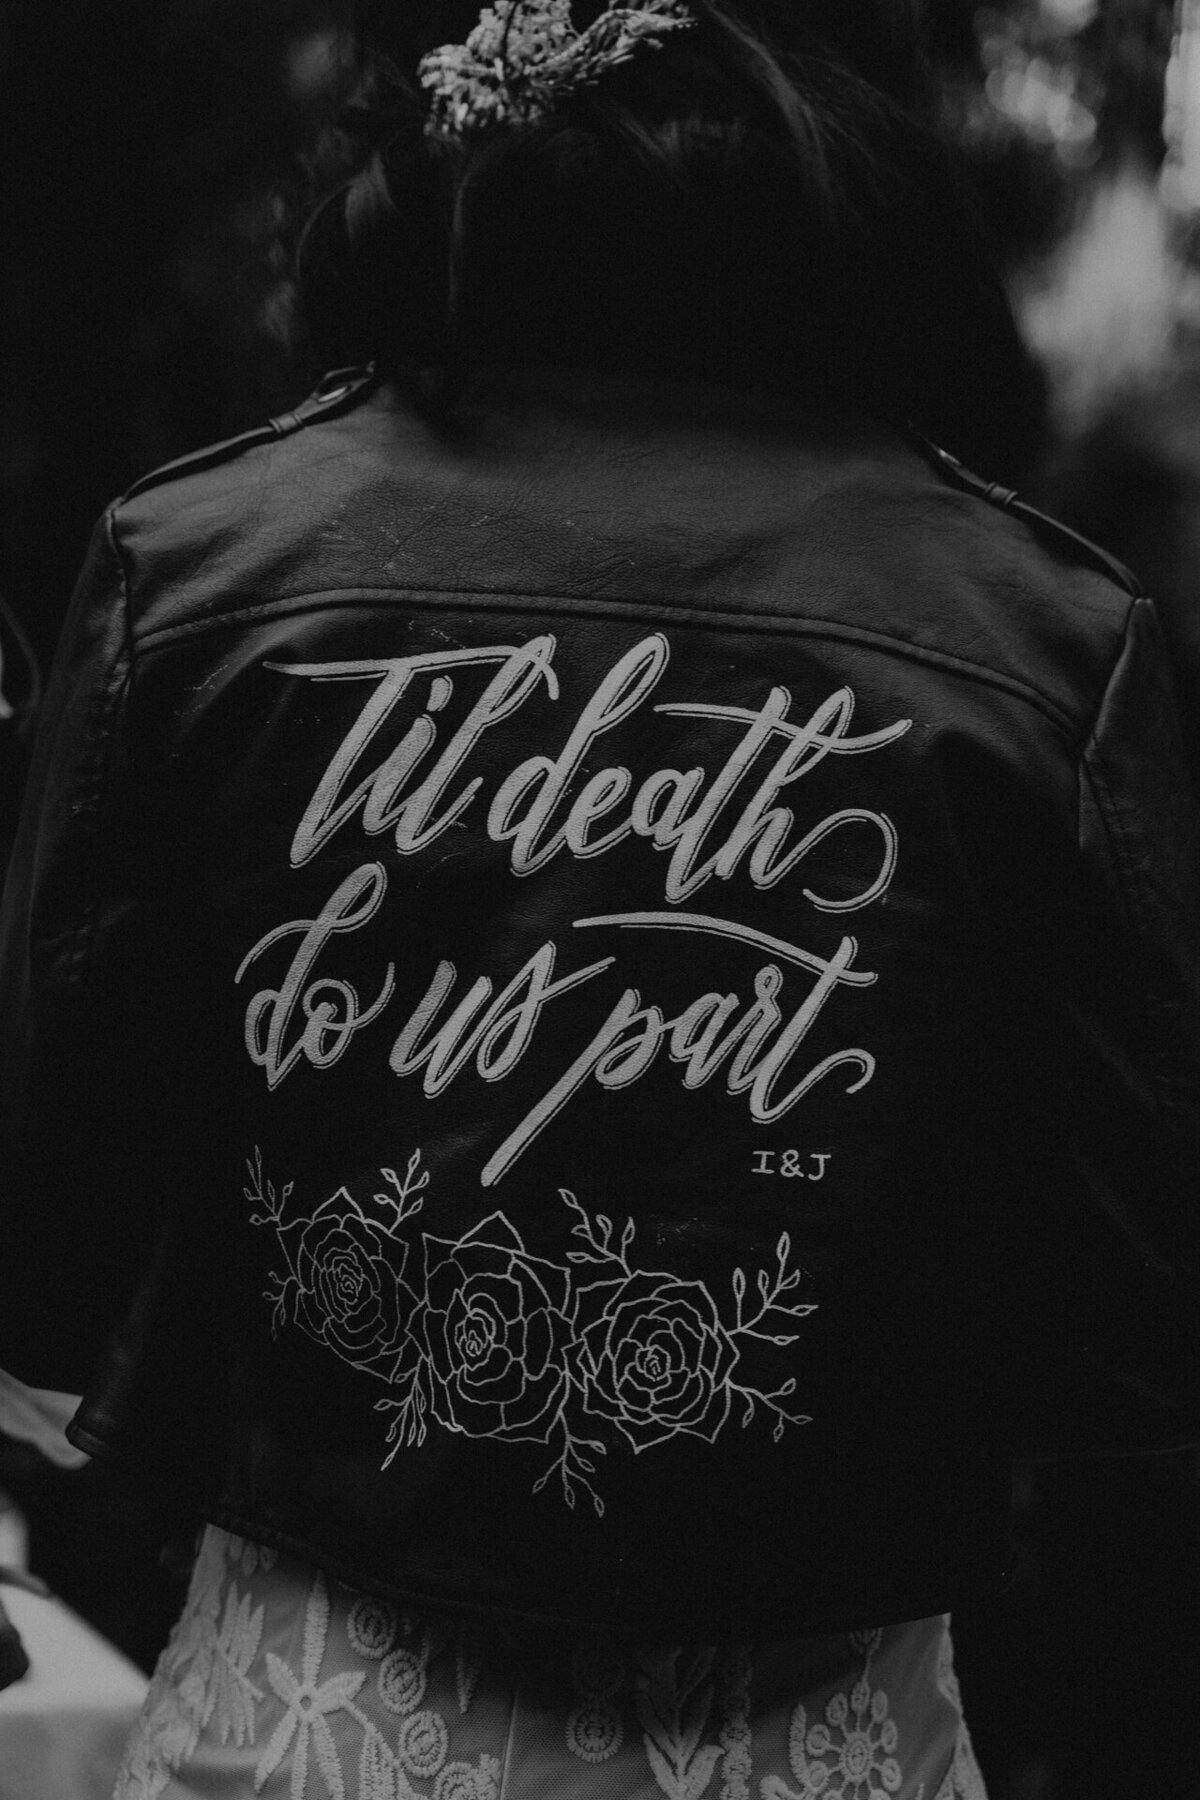 Till death do us part leather jacket